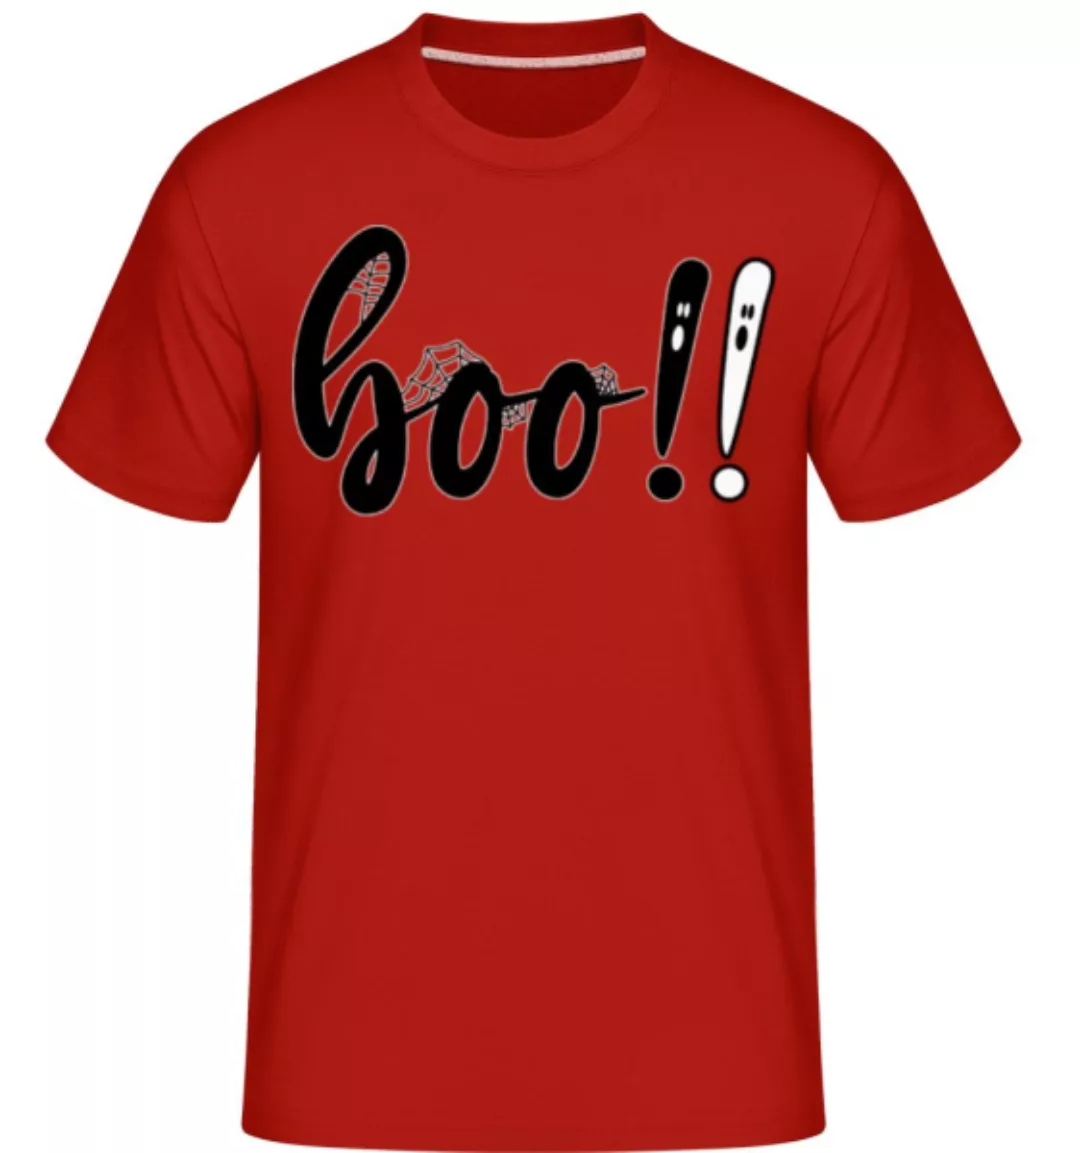 Boo · Shirtinator Männer T-Shirt günstig online kaufen